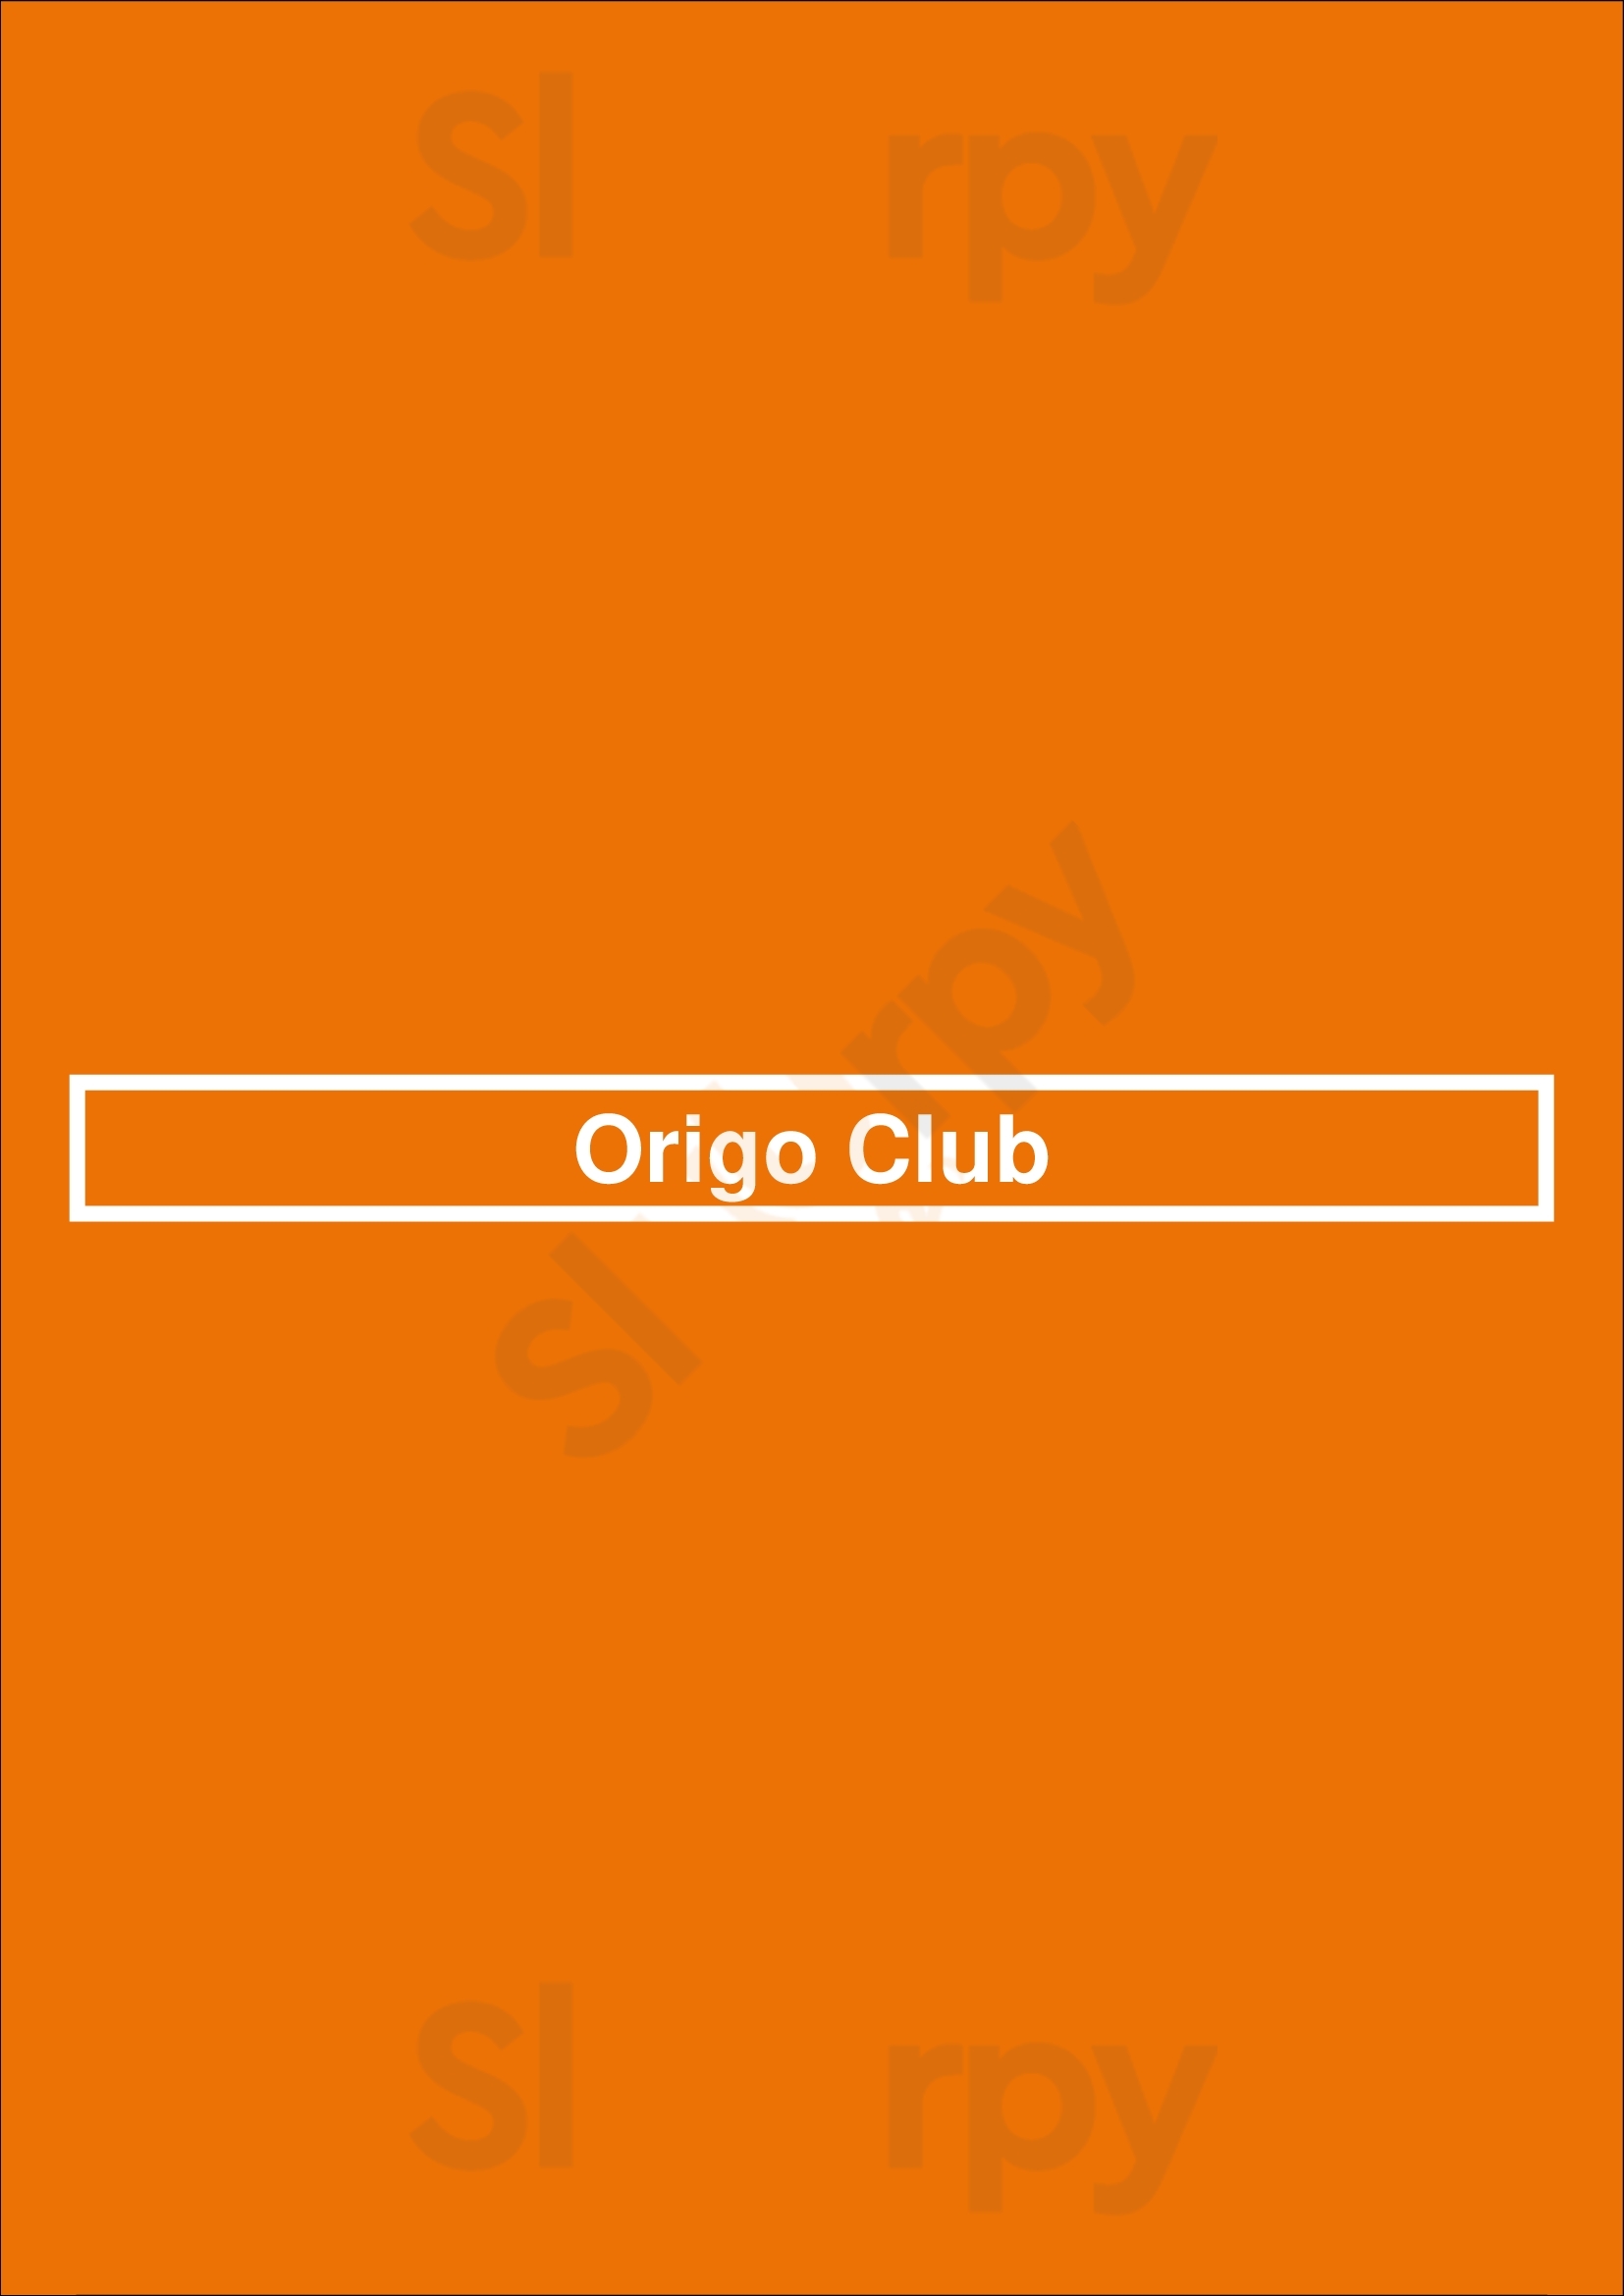 Origo Club Richmond Menu - 1